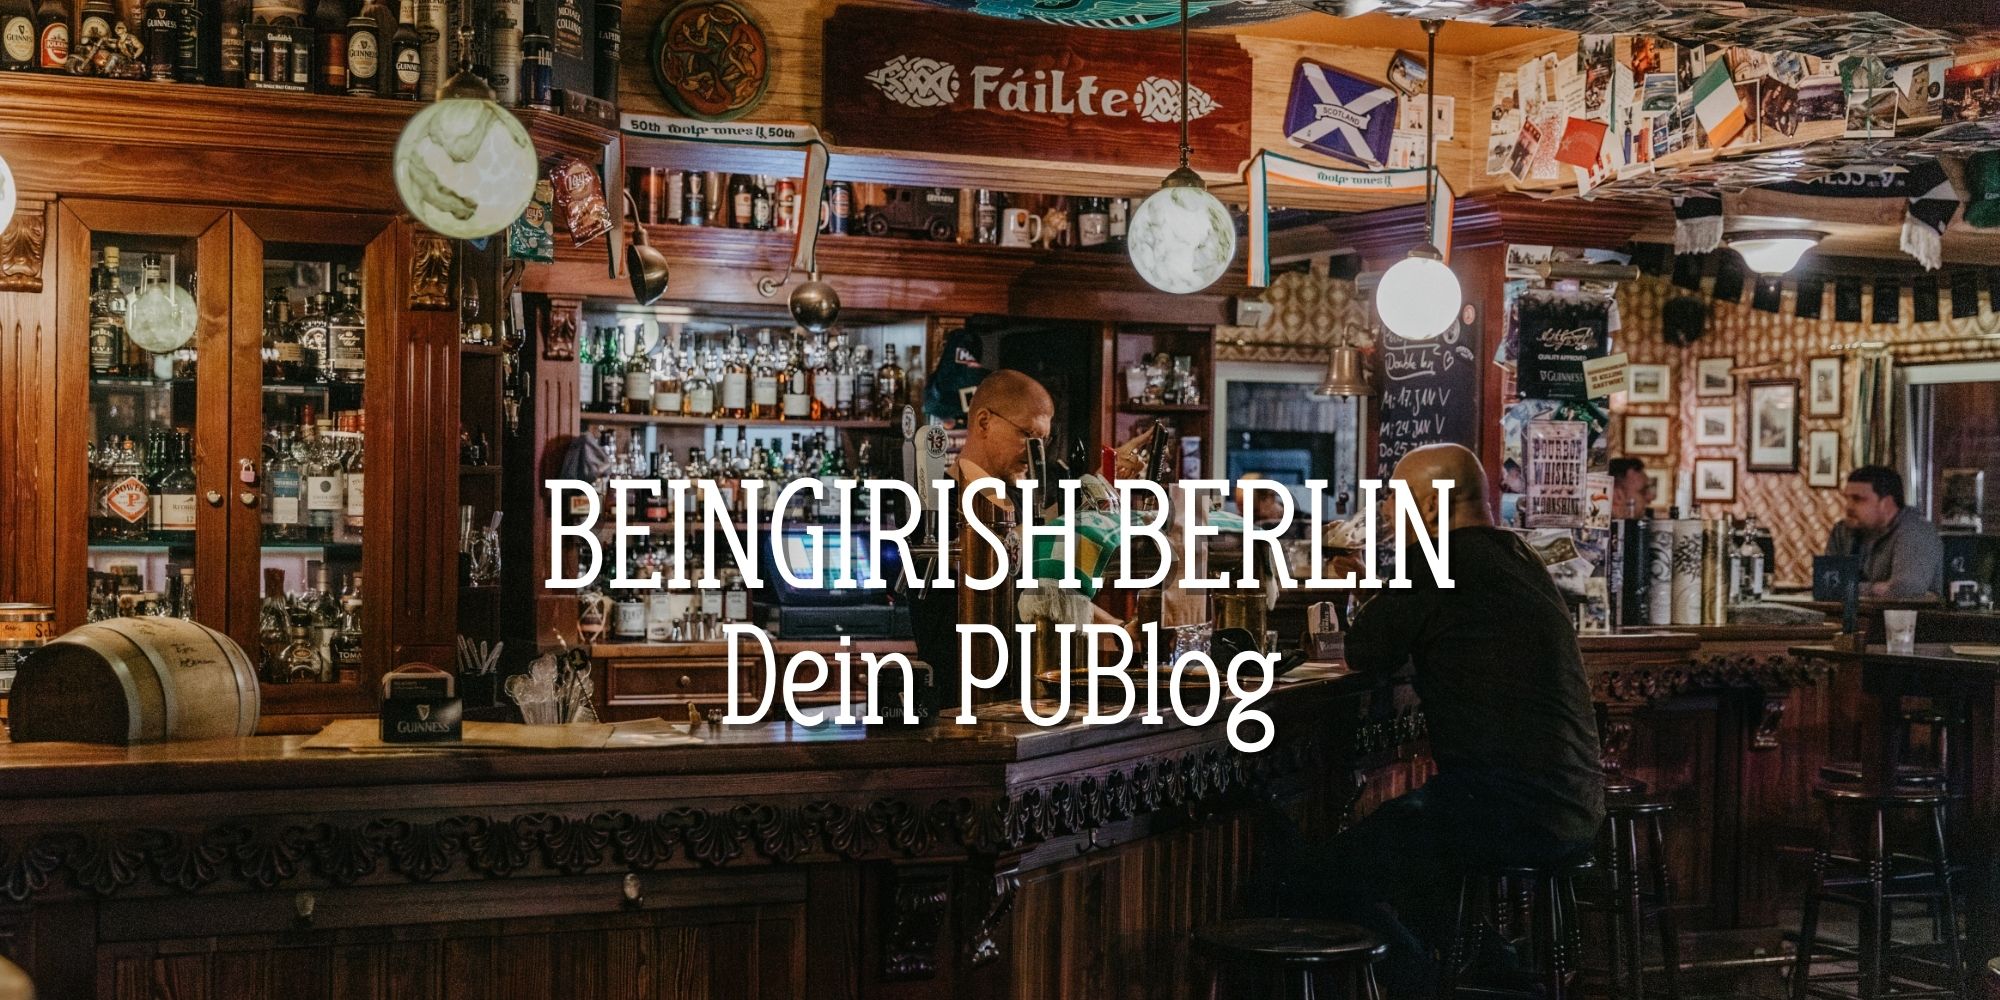 (c) Beingirish.berlin